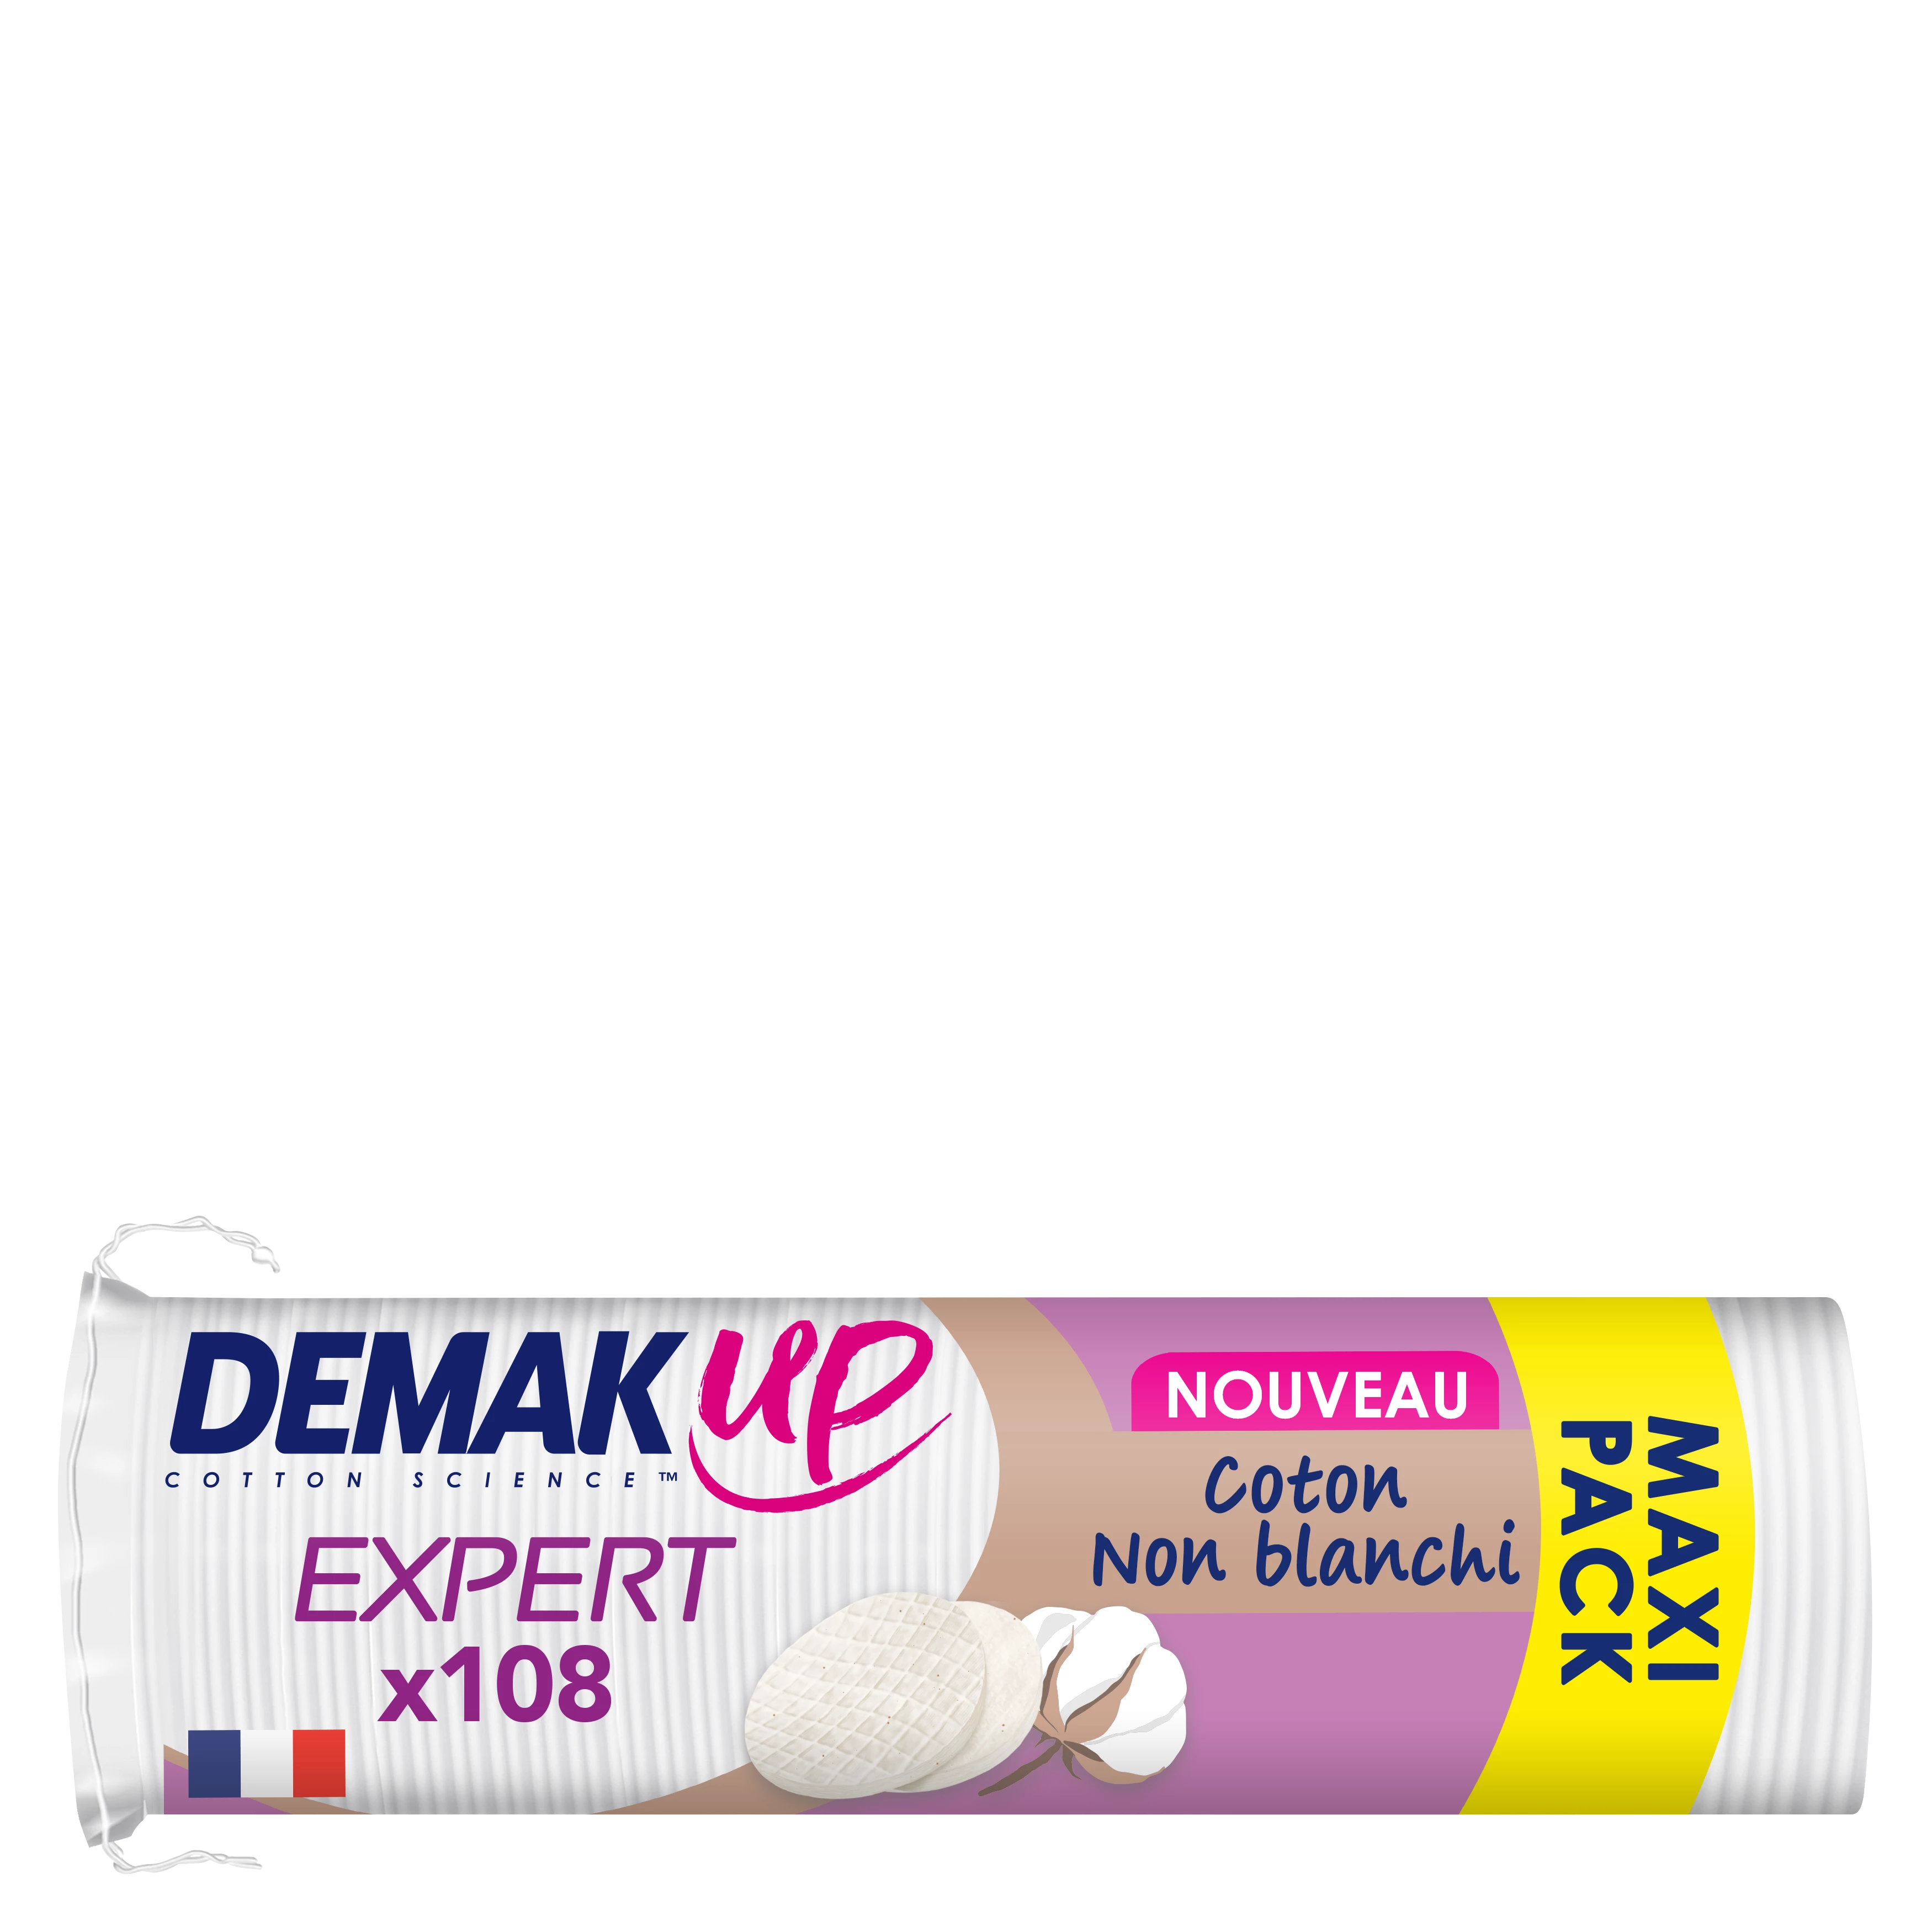 Almohadilla desmaquillante Demakup Expert X108